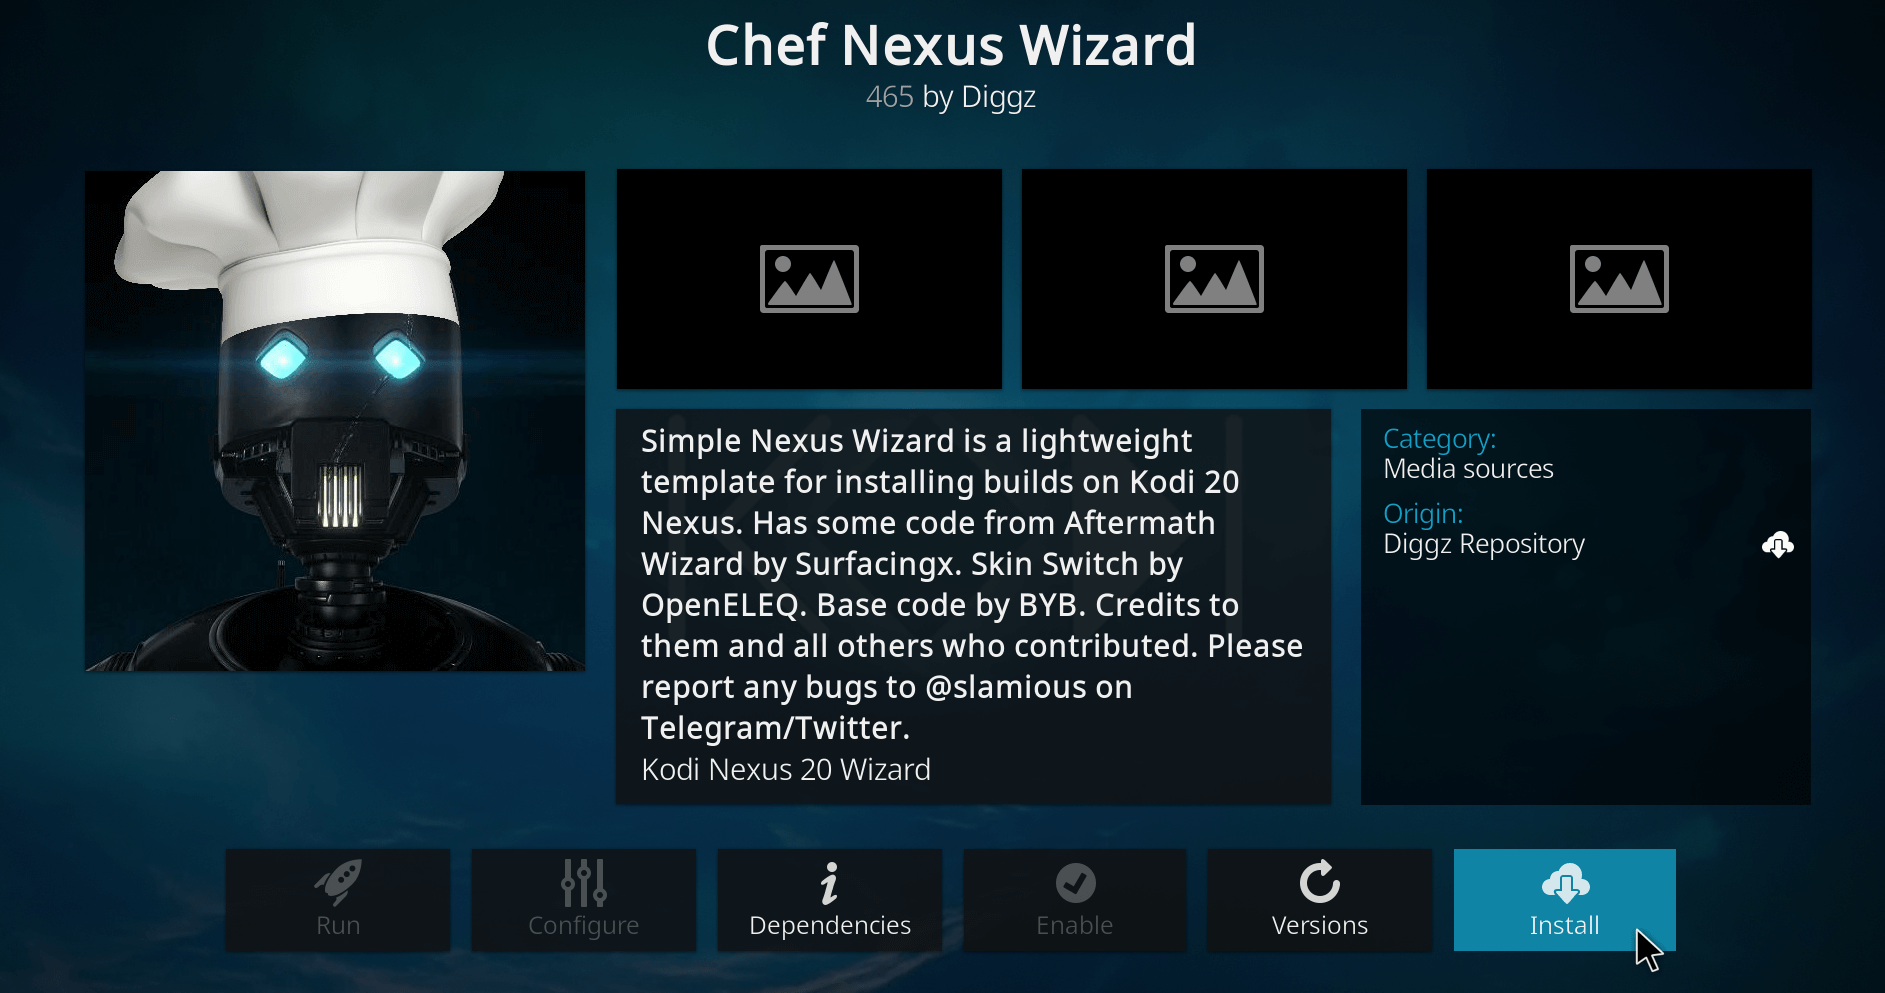 Install chef nexus wizard